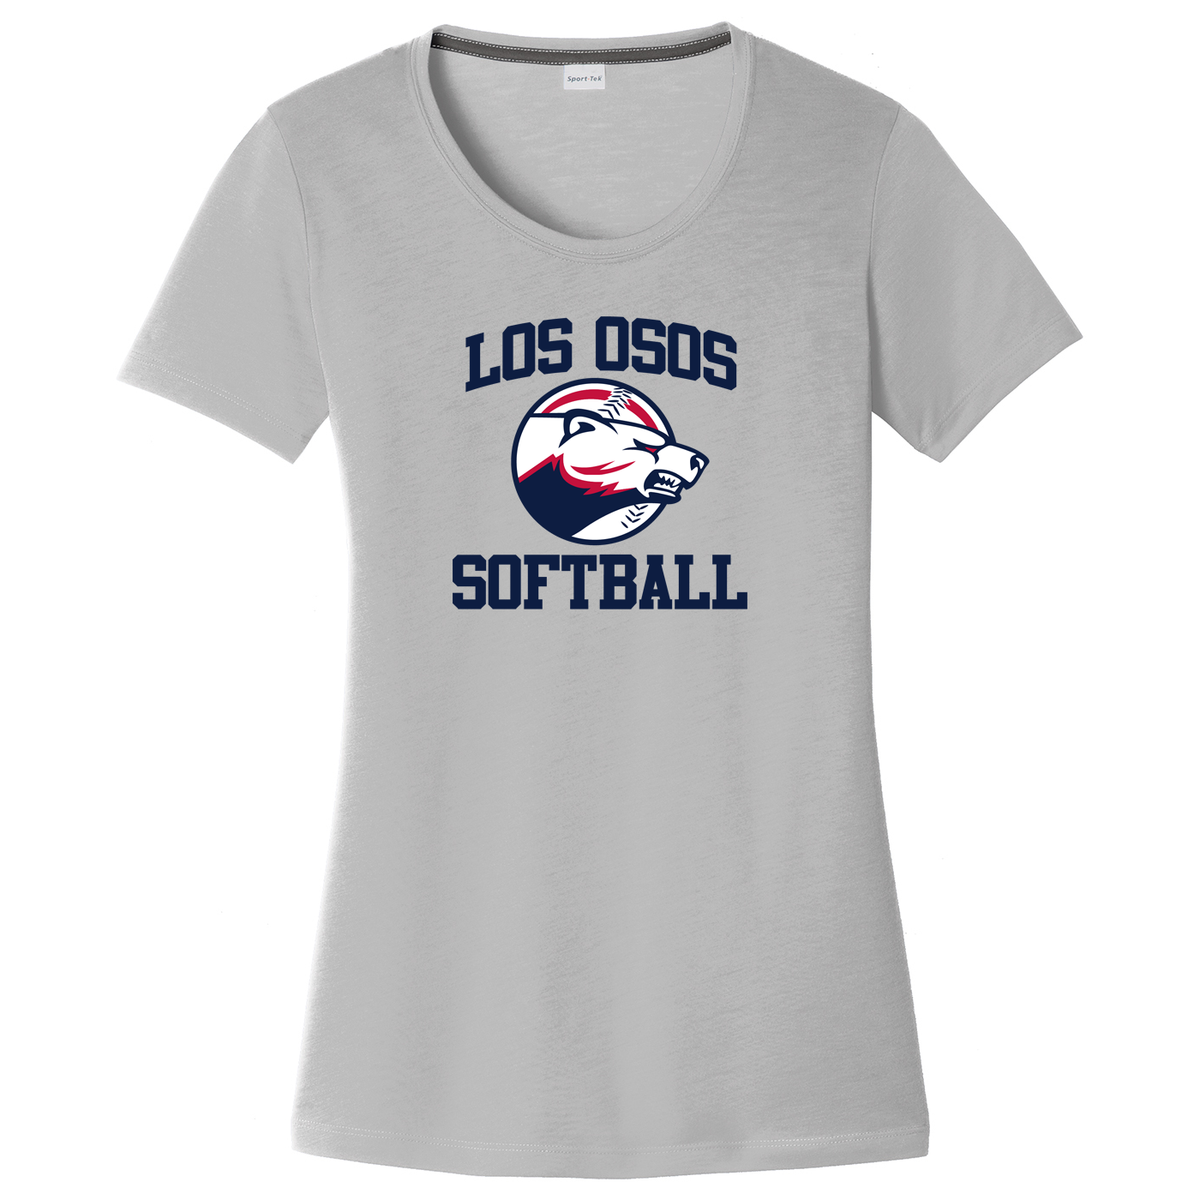 Los Osos Softball Women's CottonTouch Performance T-Shirt